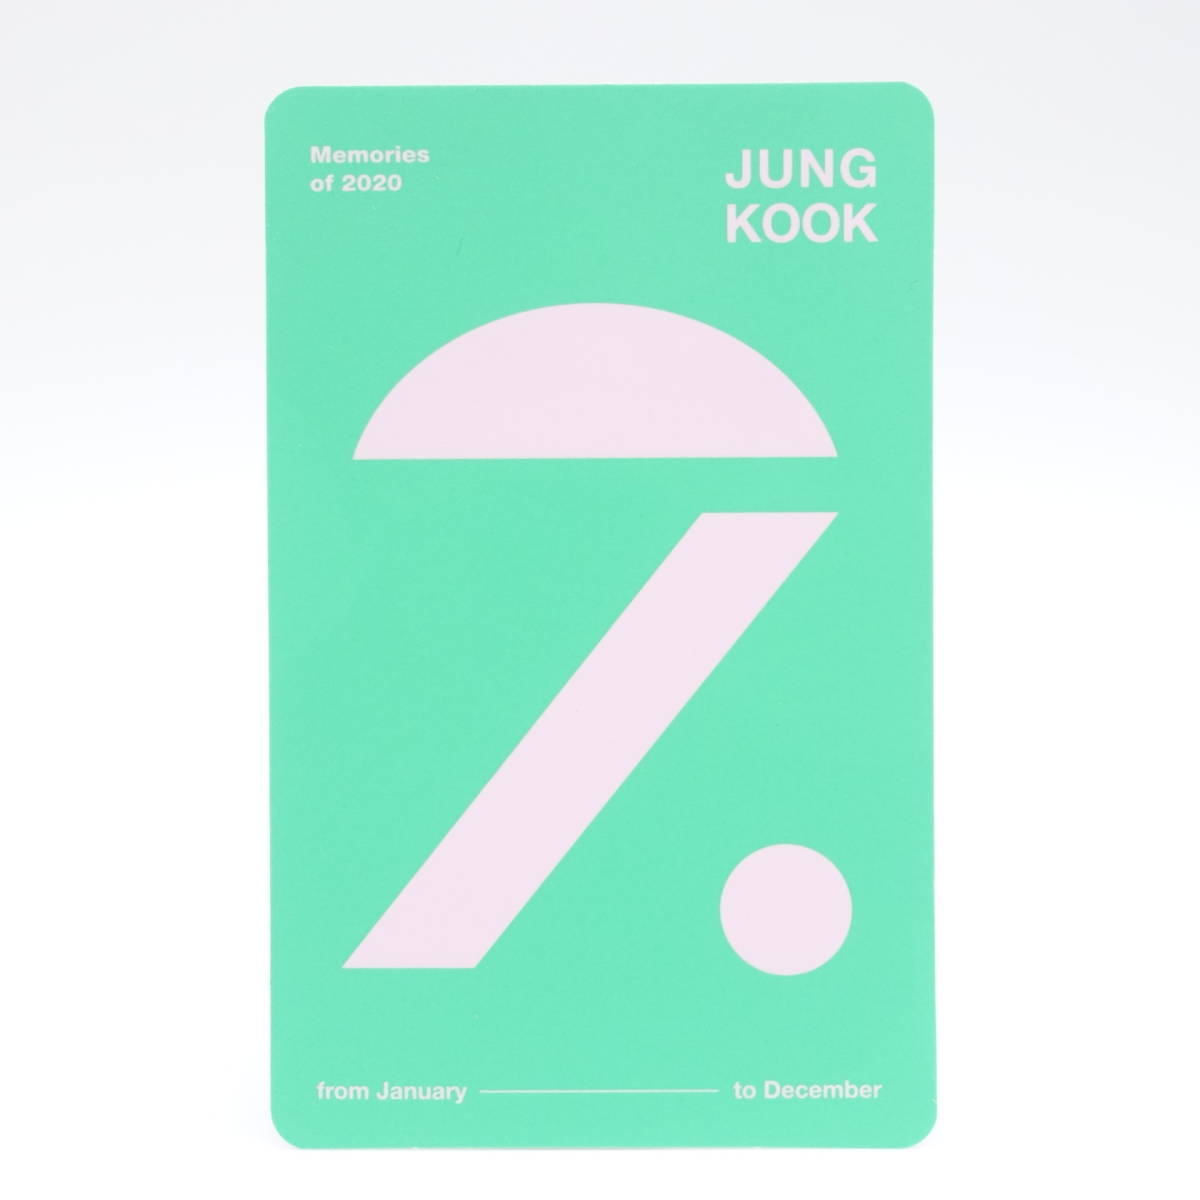 BTS bulletproof boy . van tongue / John gkJUNG KOOK/Memories of 2020/FC official / trading card card /9733